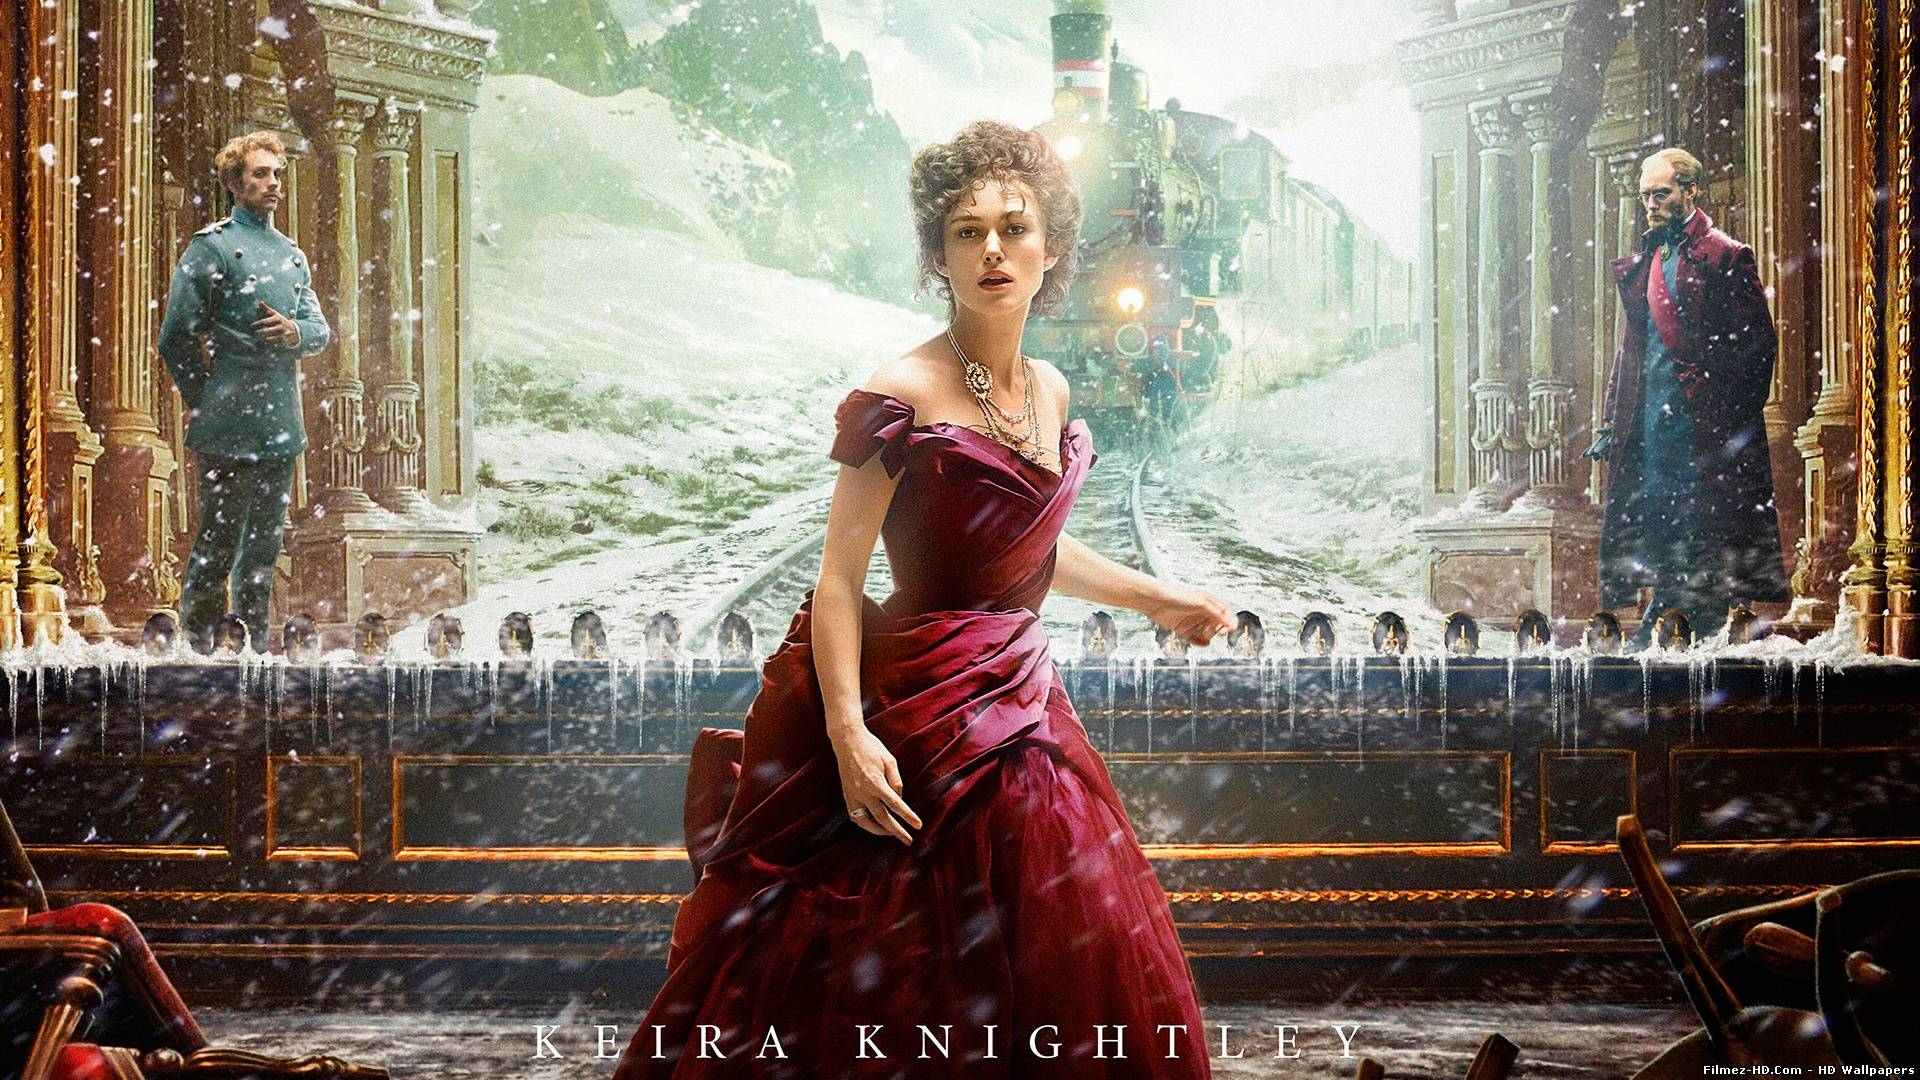 Keira Knightley as Anna Karenina Keira